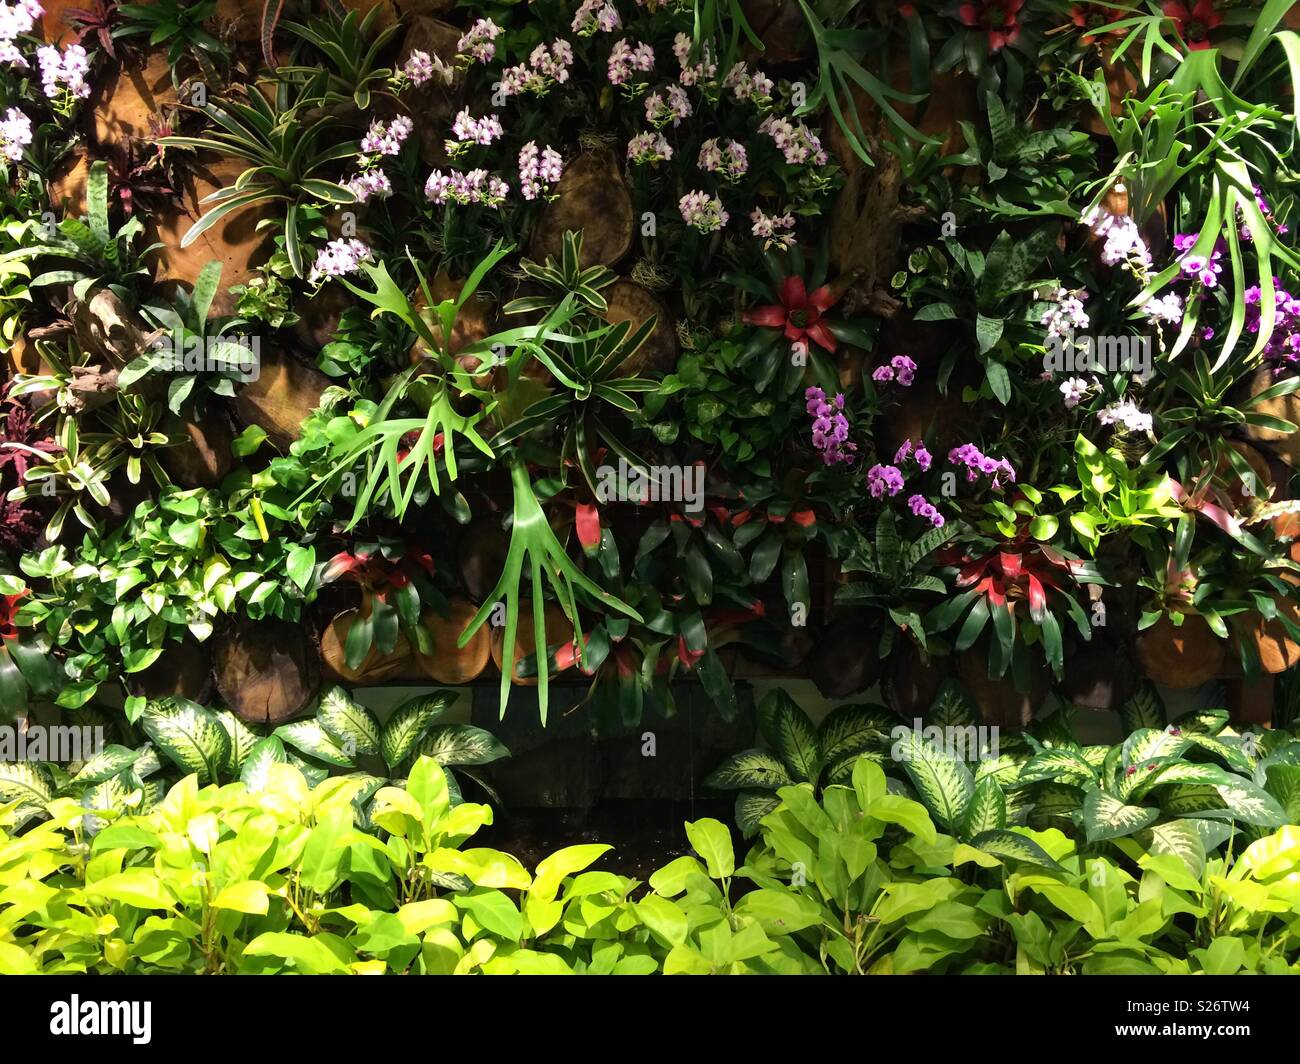 Display of tropical plants Stock Photo